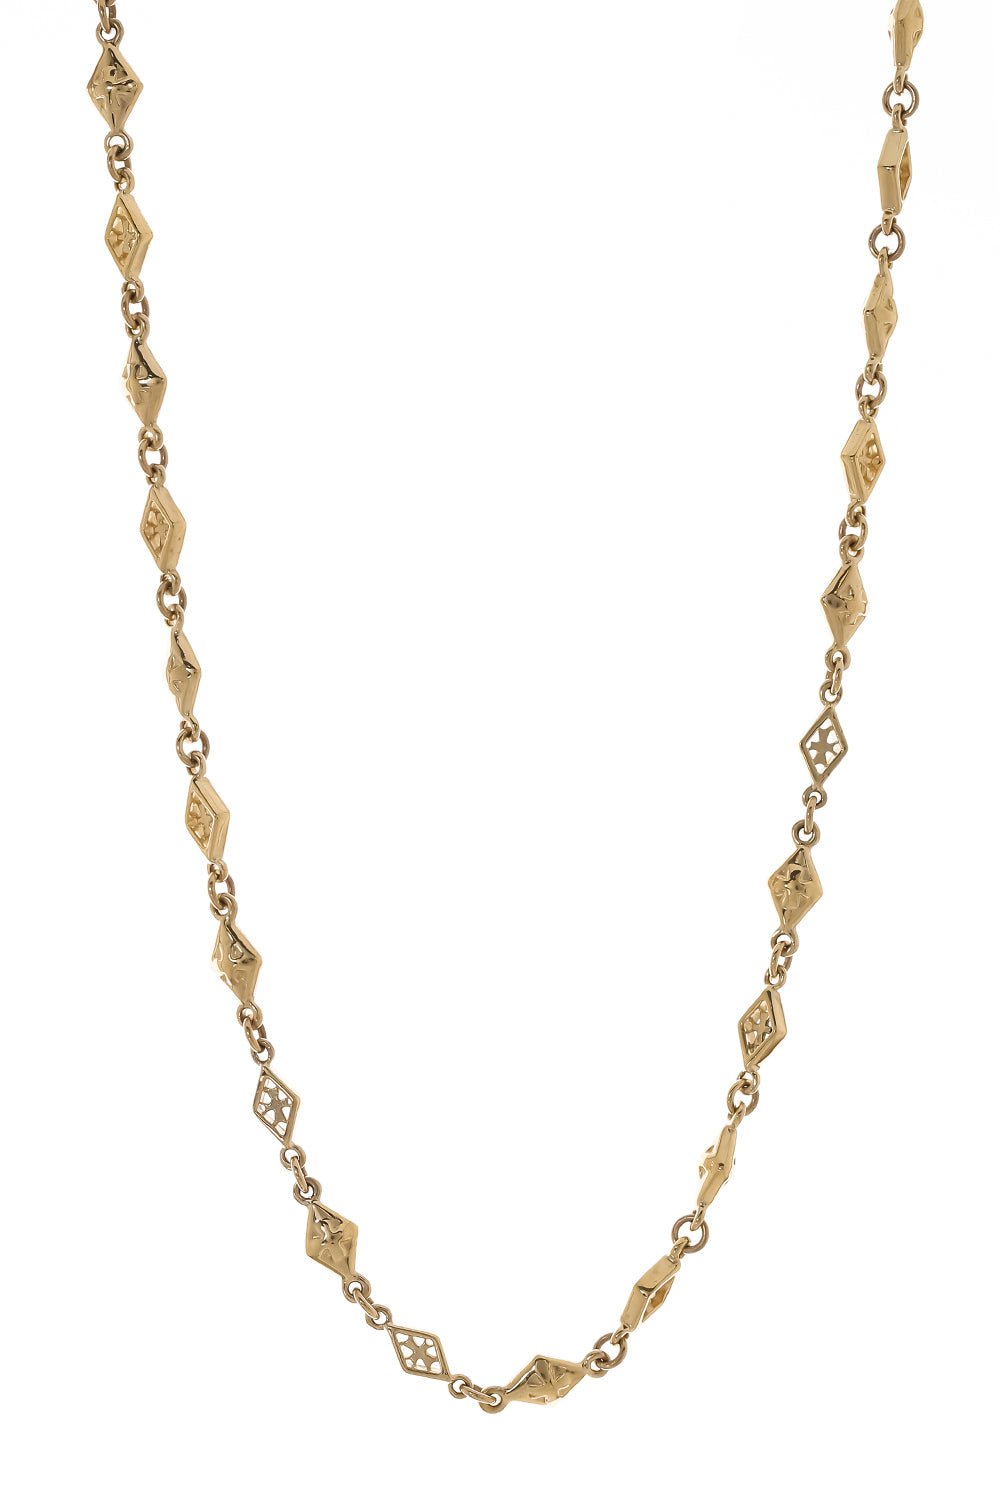 LOREE RODKIN-Mix Shaped Cross Link Chain Necklace-YELLOW GOLD